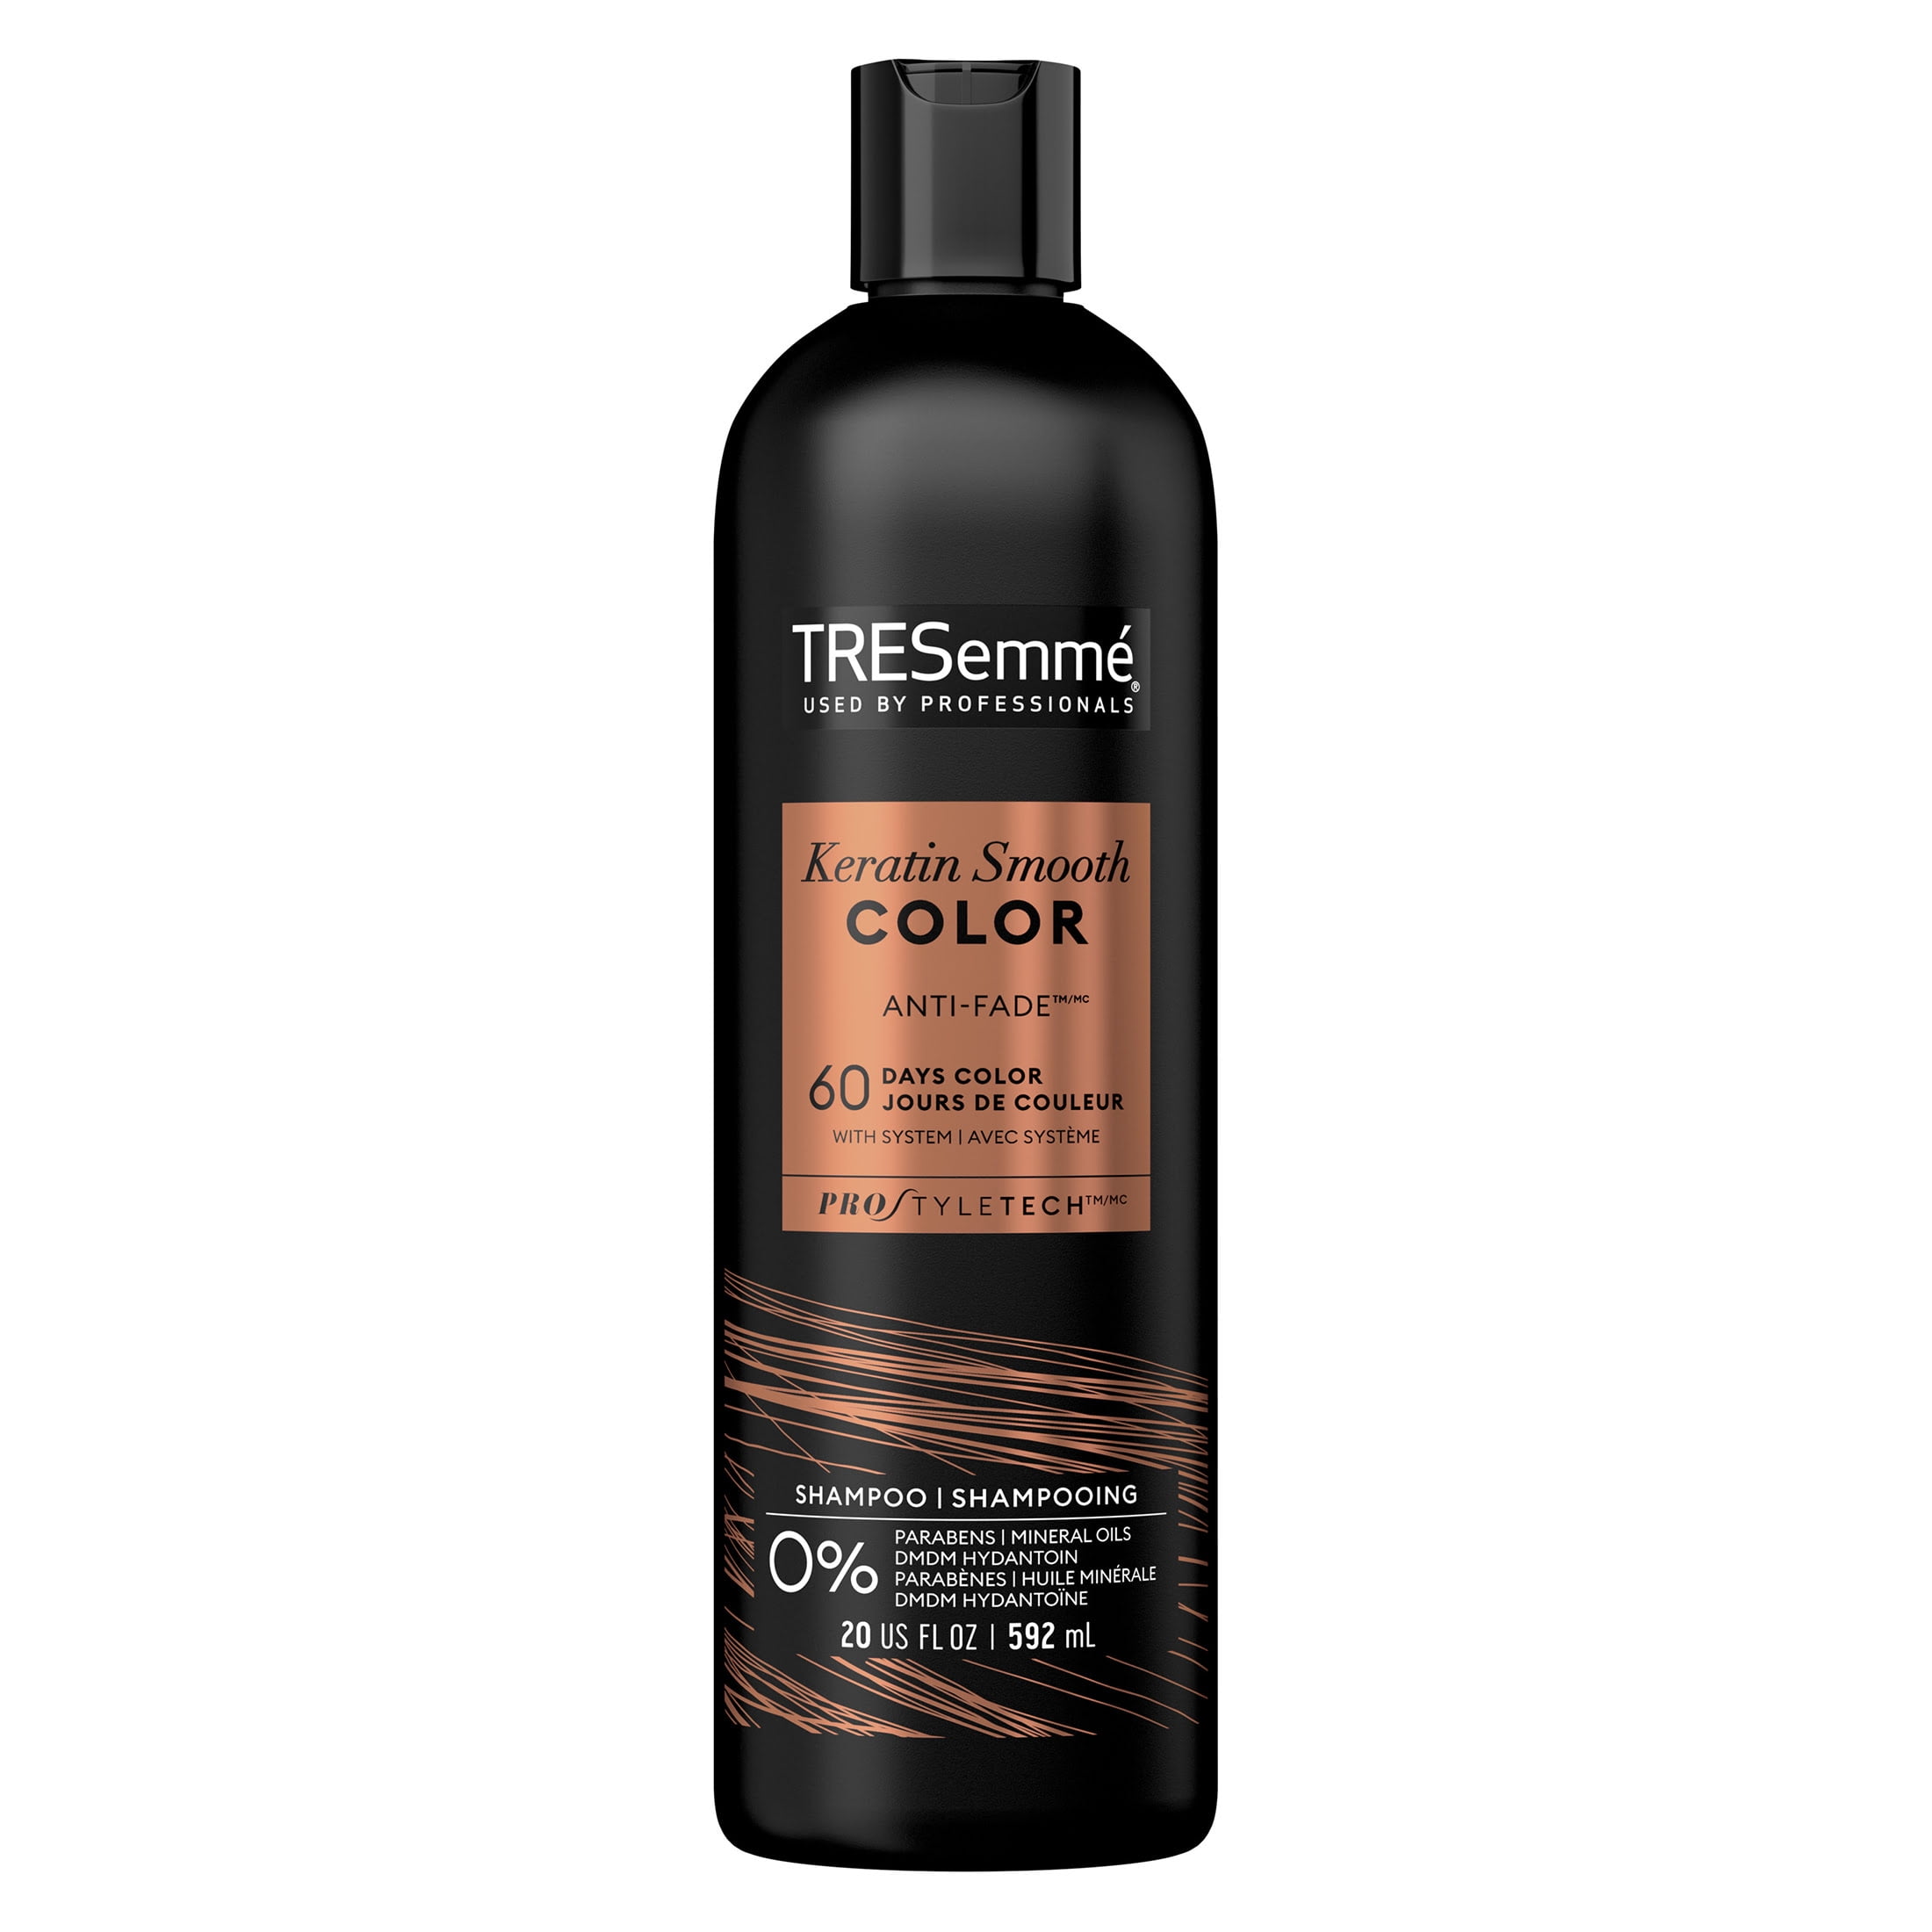 Tresemme Keratin Smooth Color Anti-Fade Moisturizing Daily Shampoo 20 fl oz  